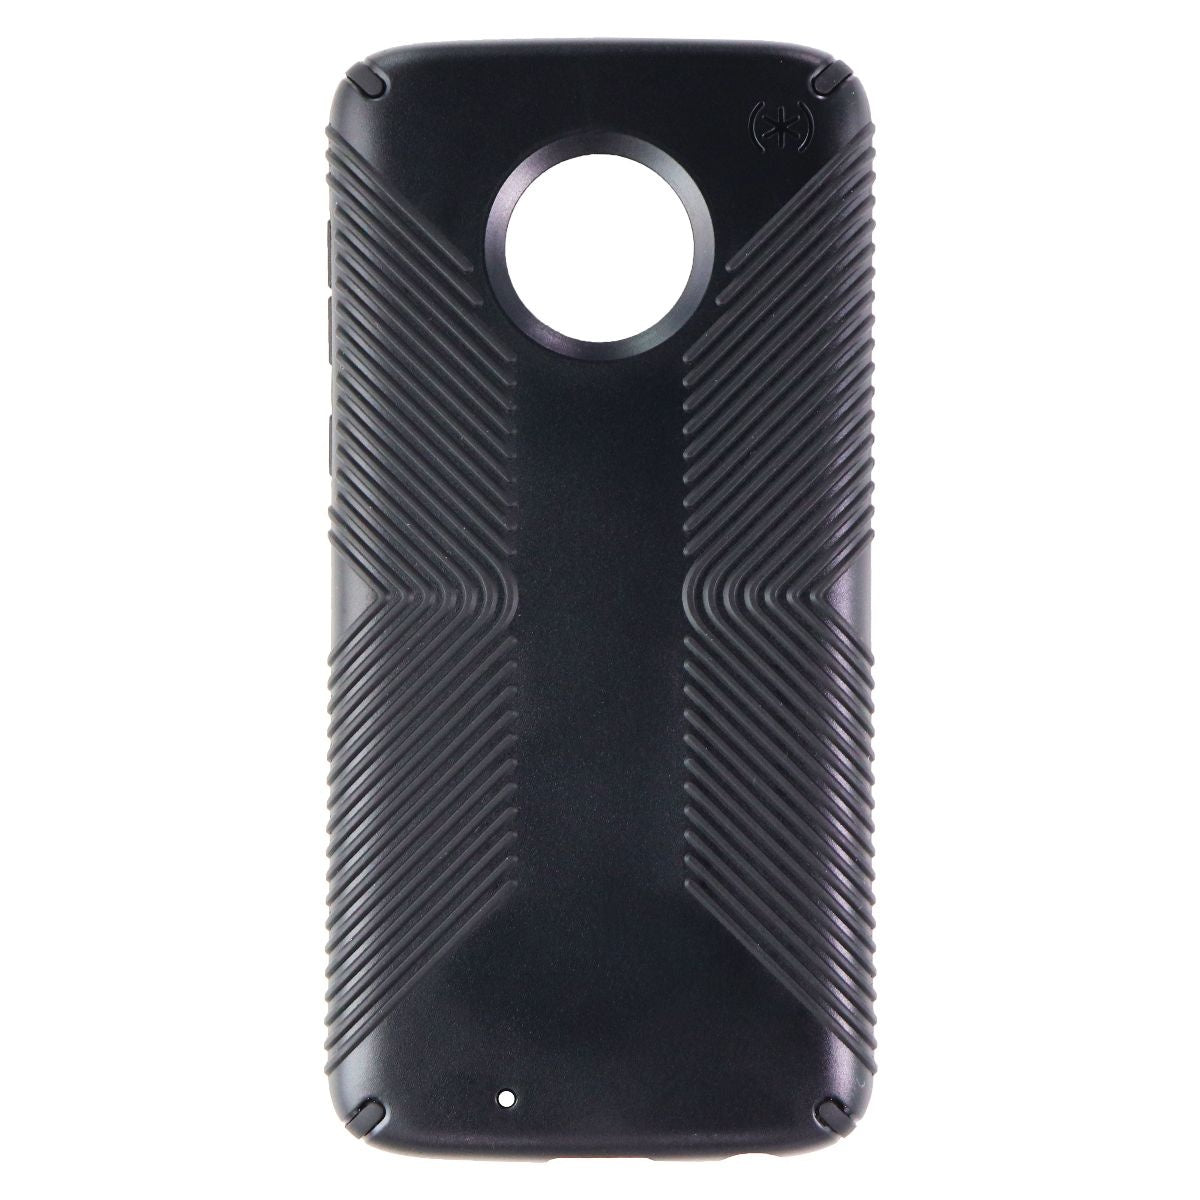 Speck Presidio Grip Series Hybrid Hard Case for Motorola Moto G6 - Black Cell Phone - Cases, Covers & Skins Speck    - Simple Cell Bulk Wholesale Pricing - USA Seller